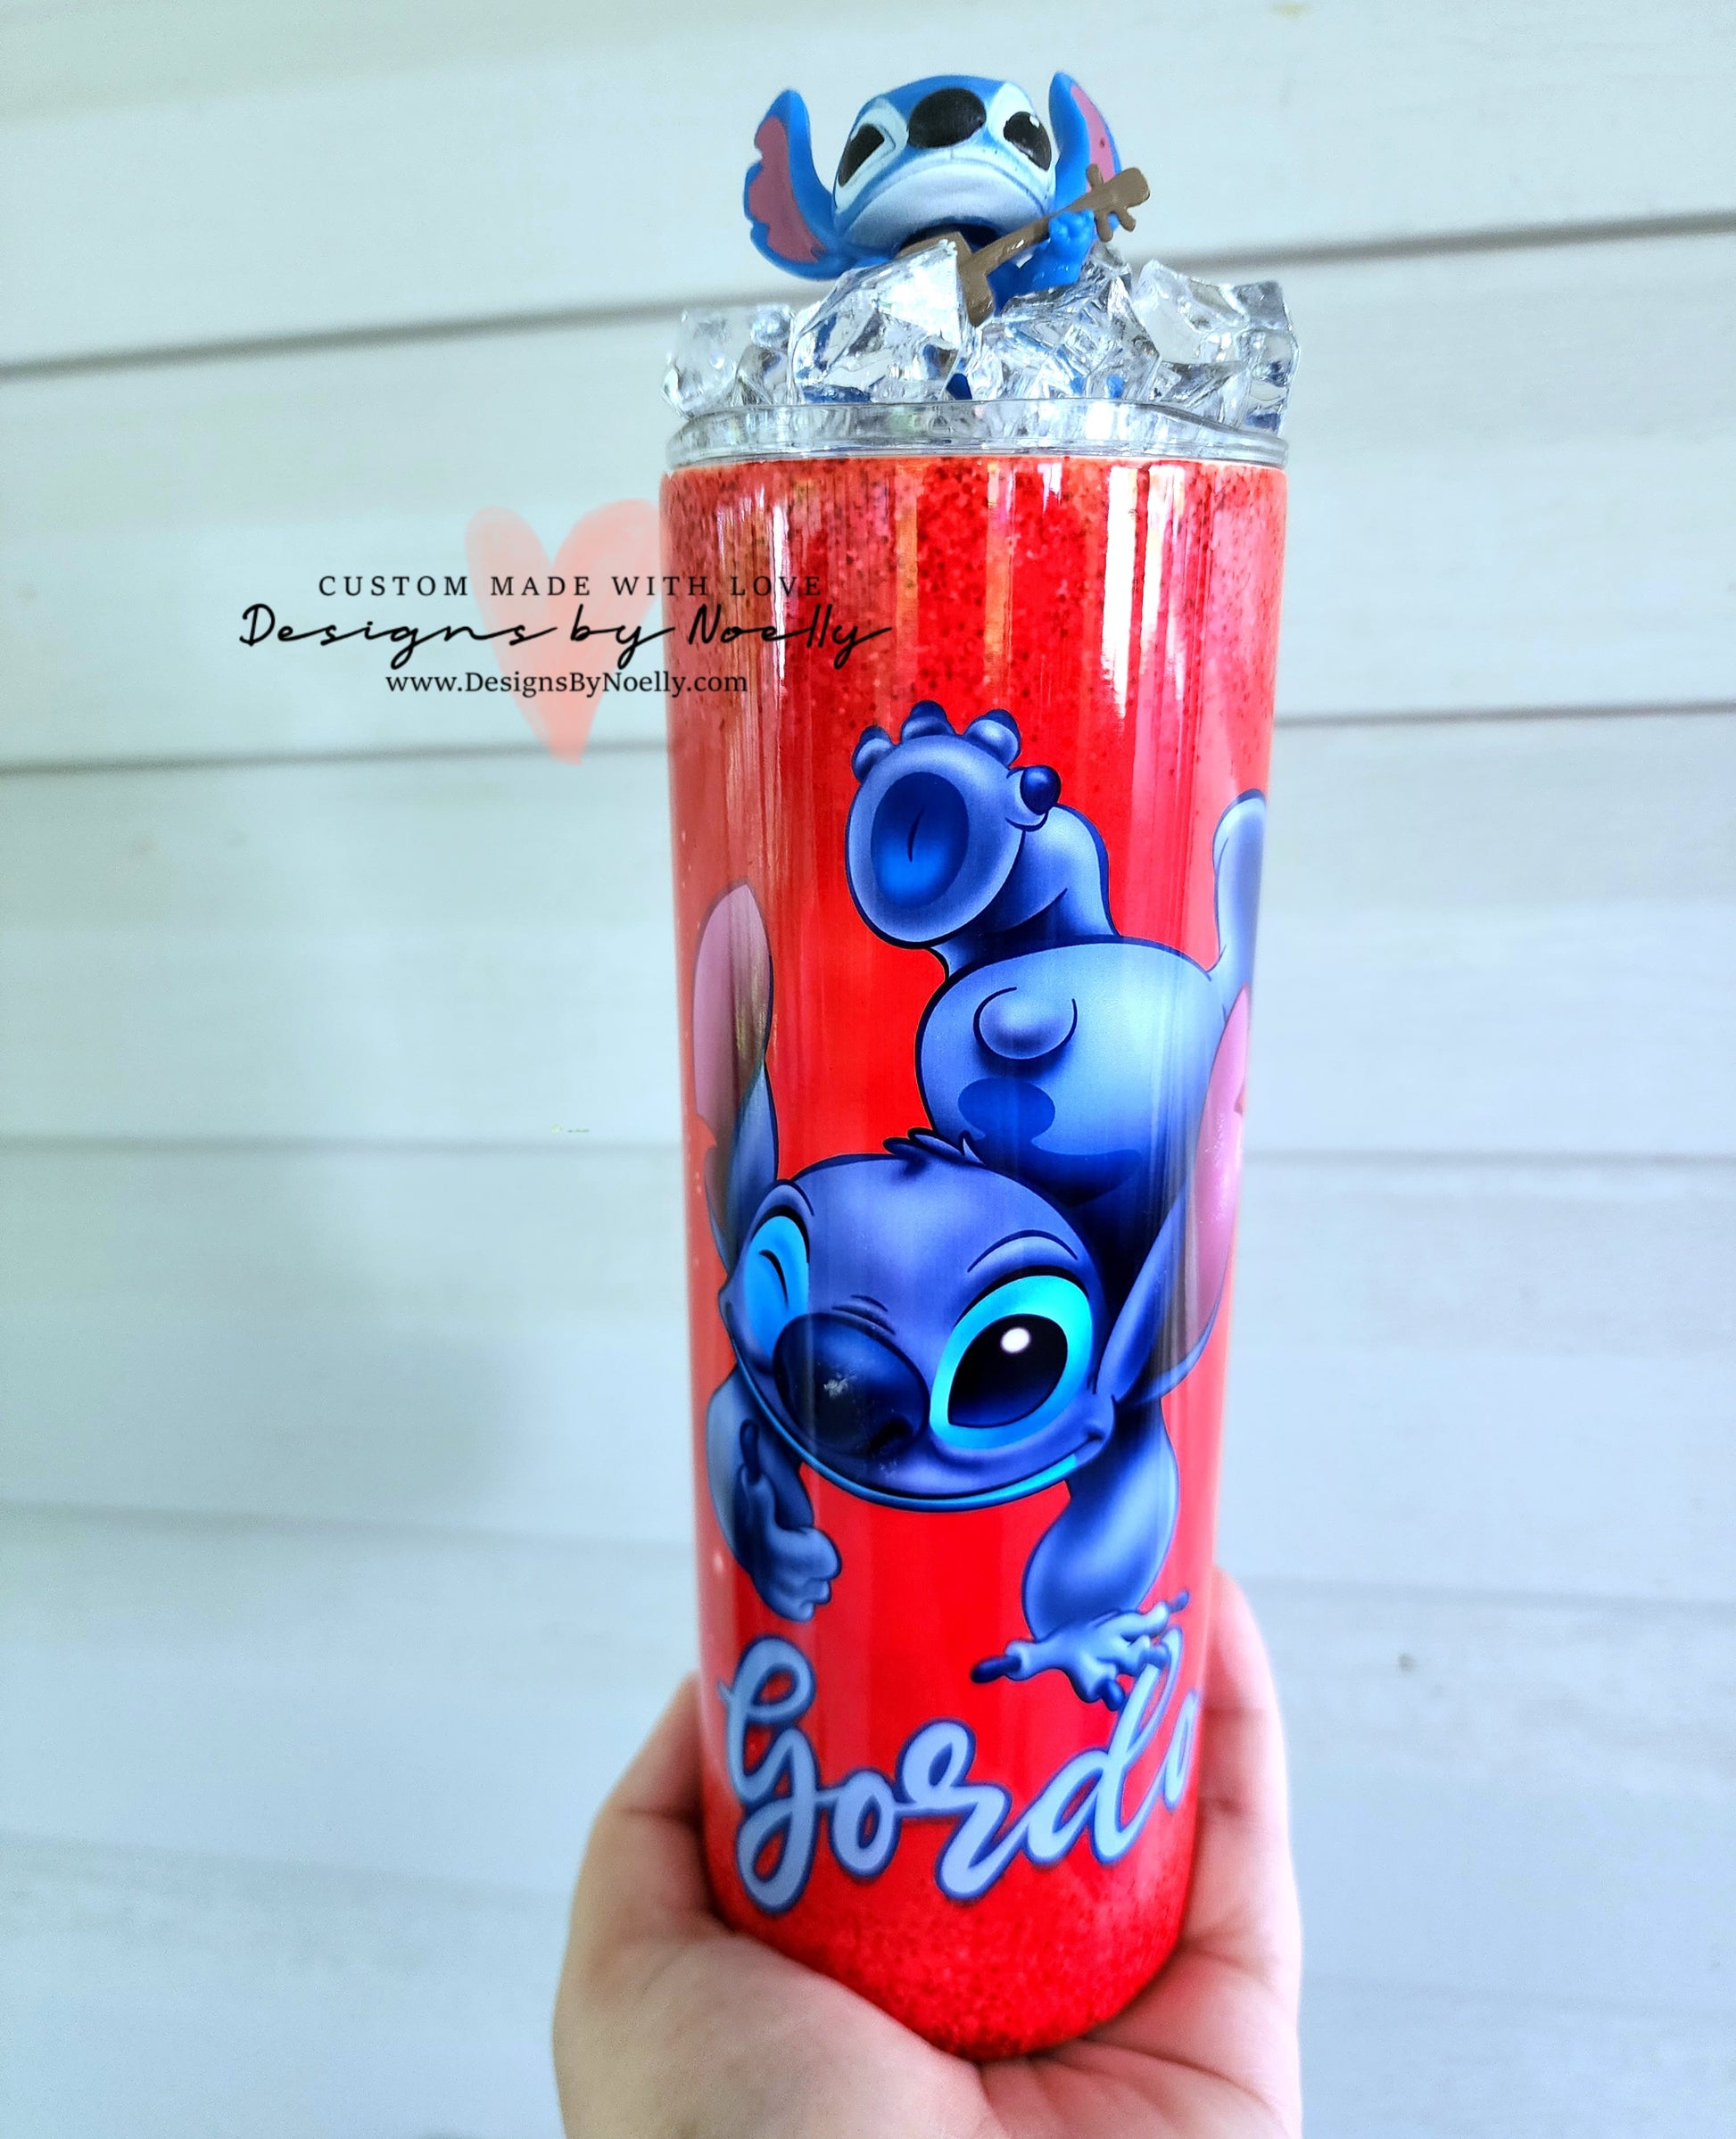 Disney Lilo & Stitch Premium Cup 20oz